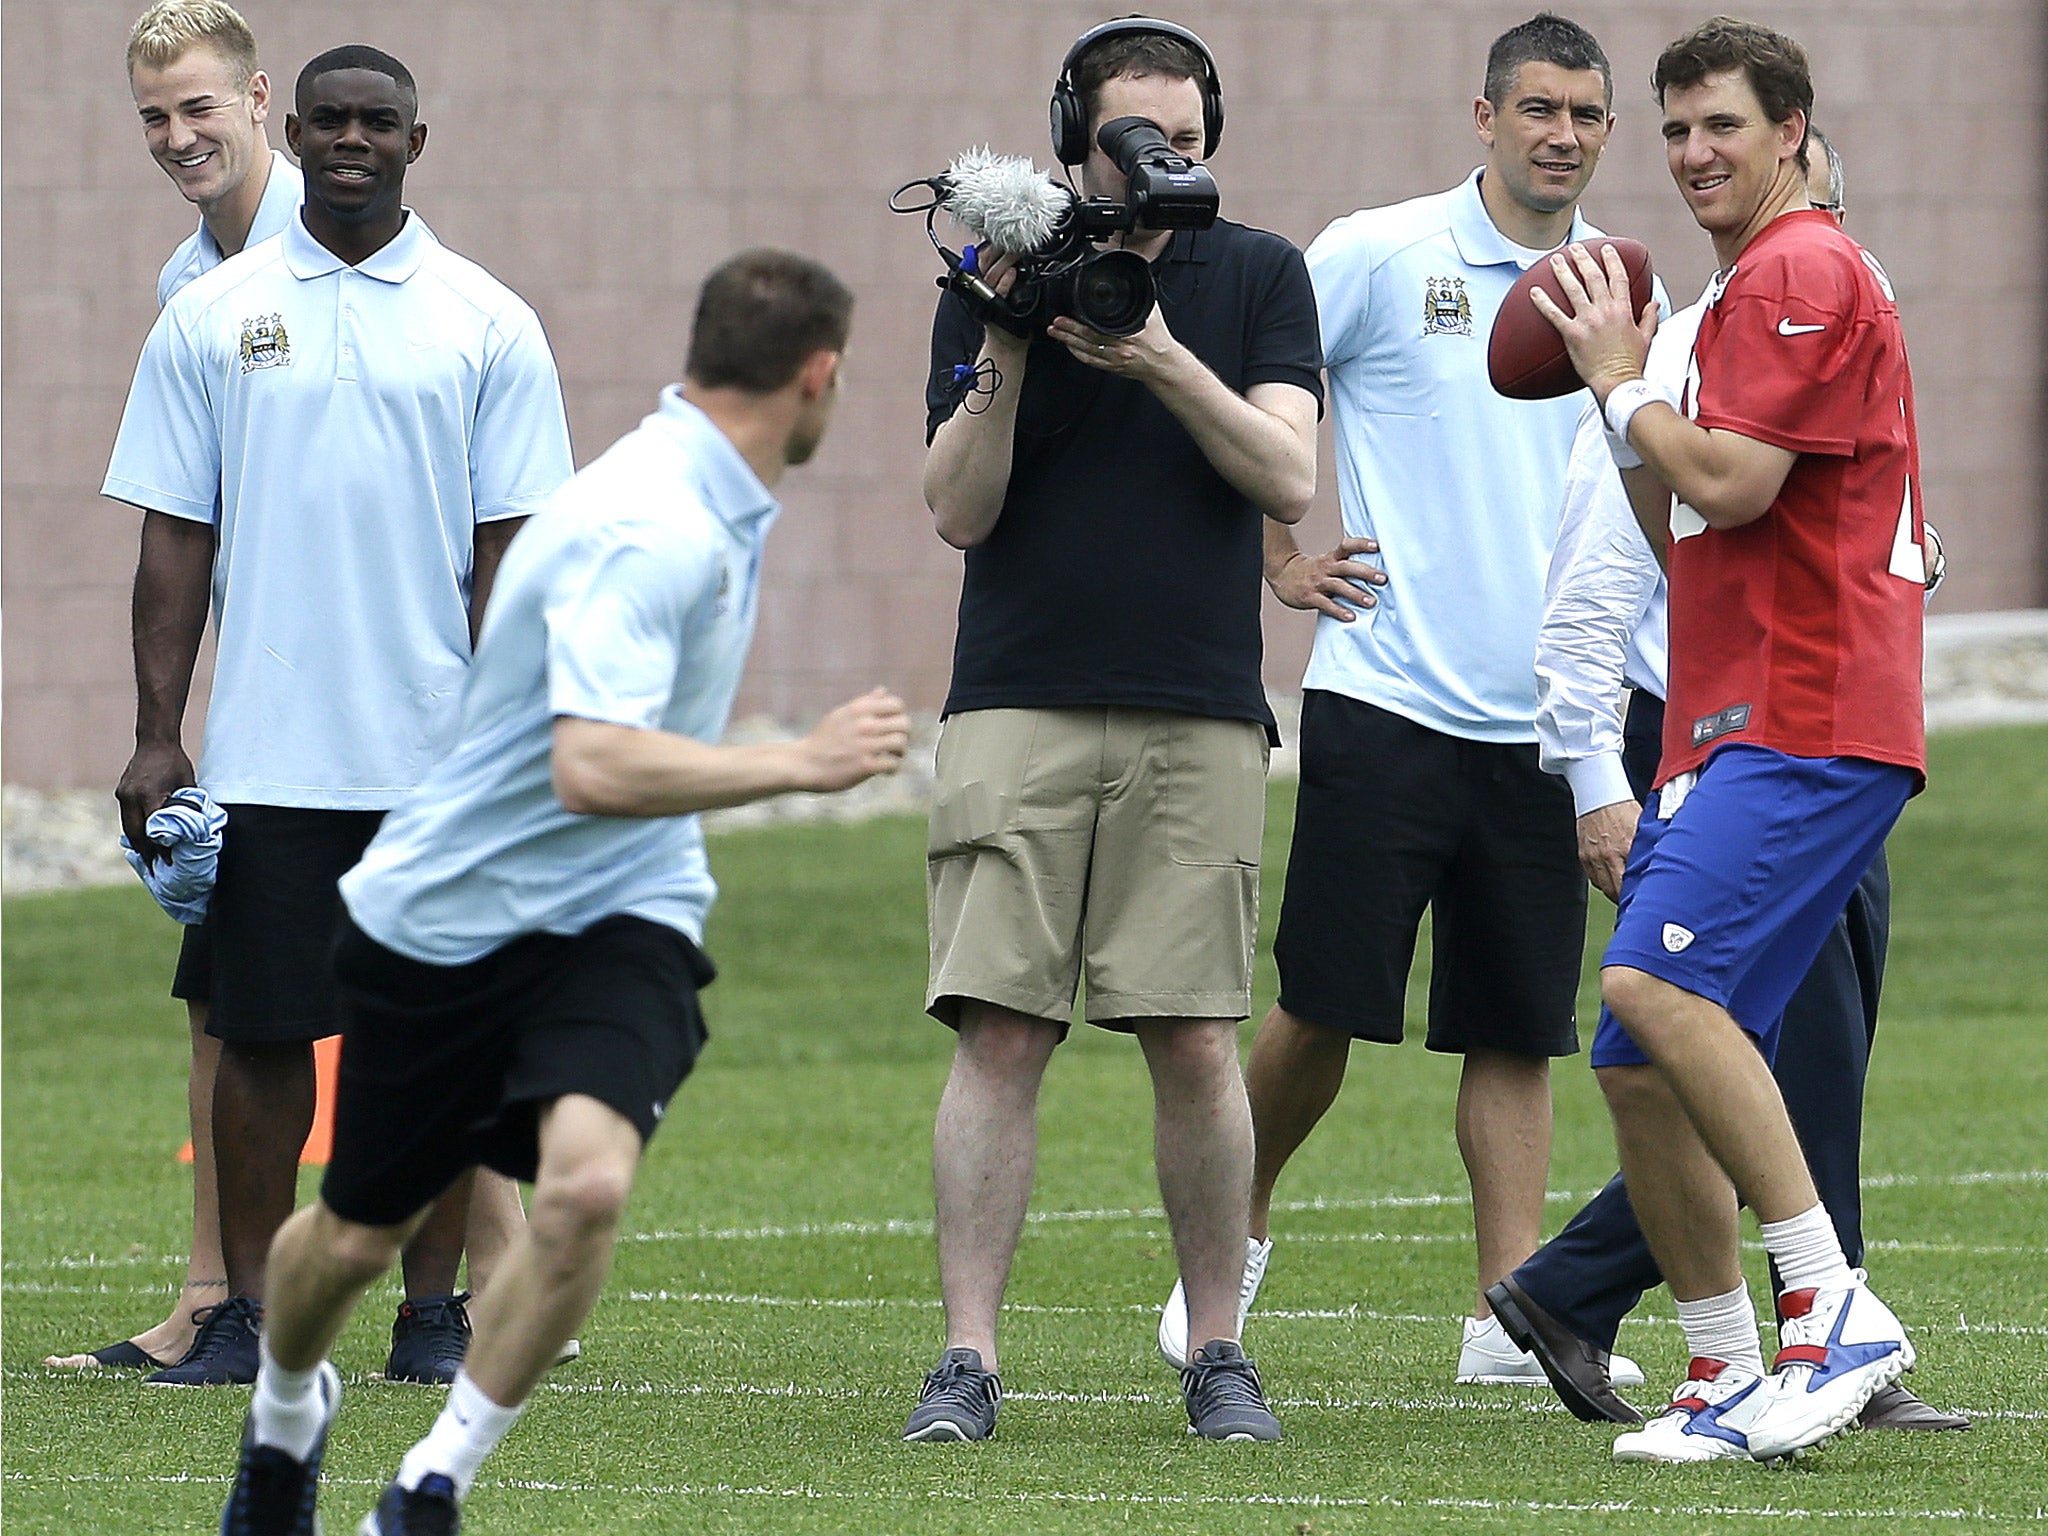 New York Giants quarterback Eli Manning looks downfield for James Milner